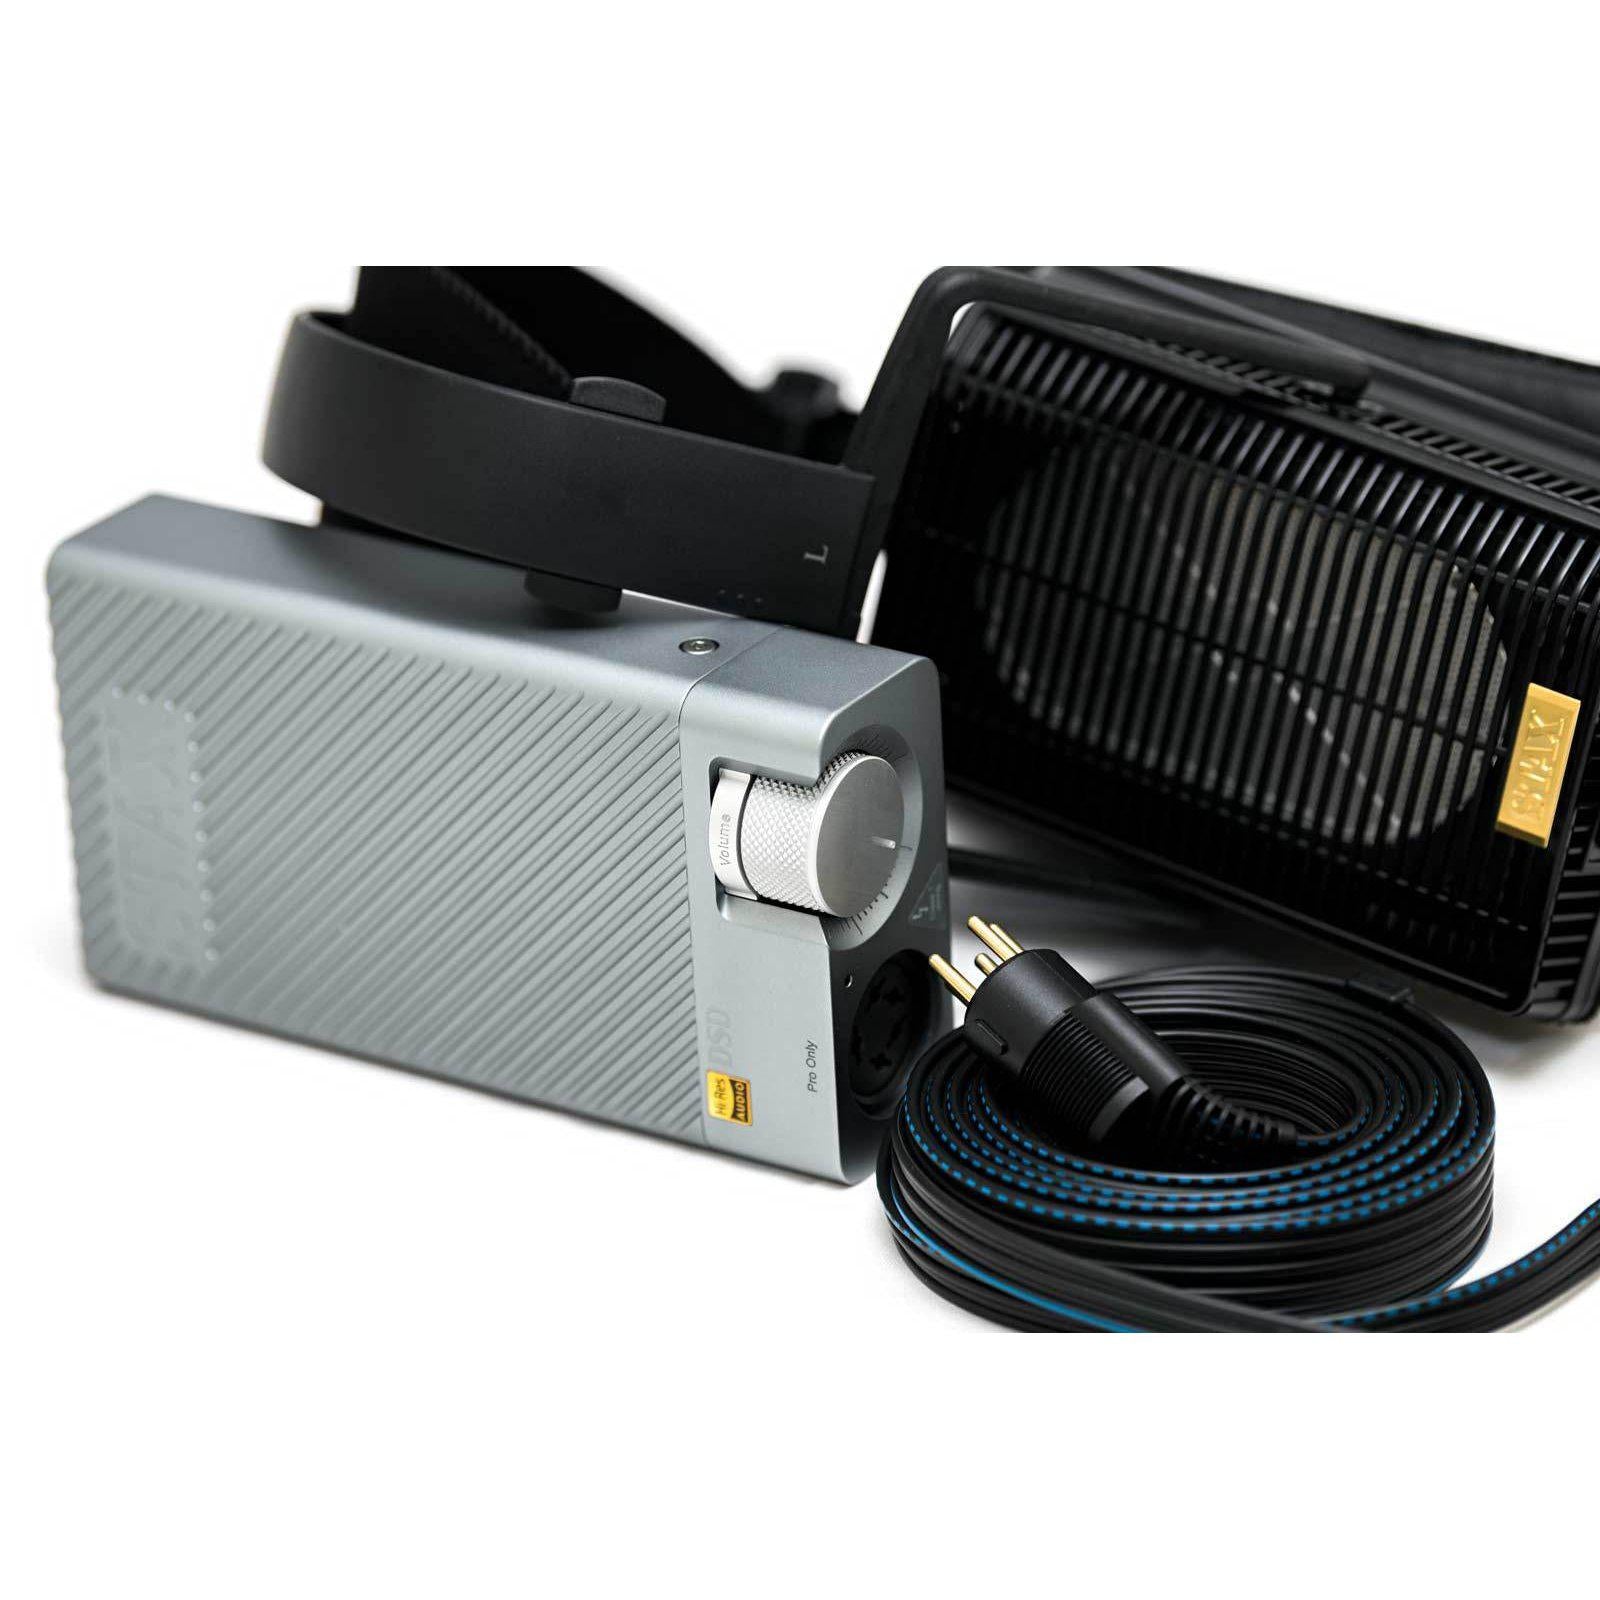 STAX SRM-D10 Portable Electrostatic Headphone Amplifier / DAC